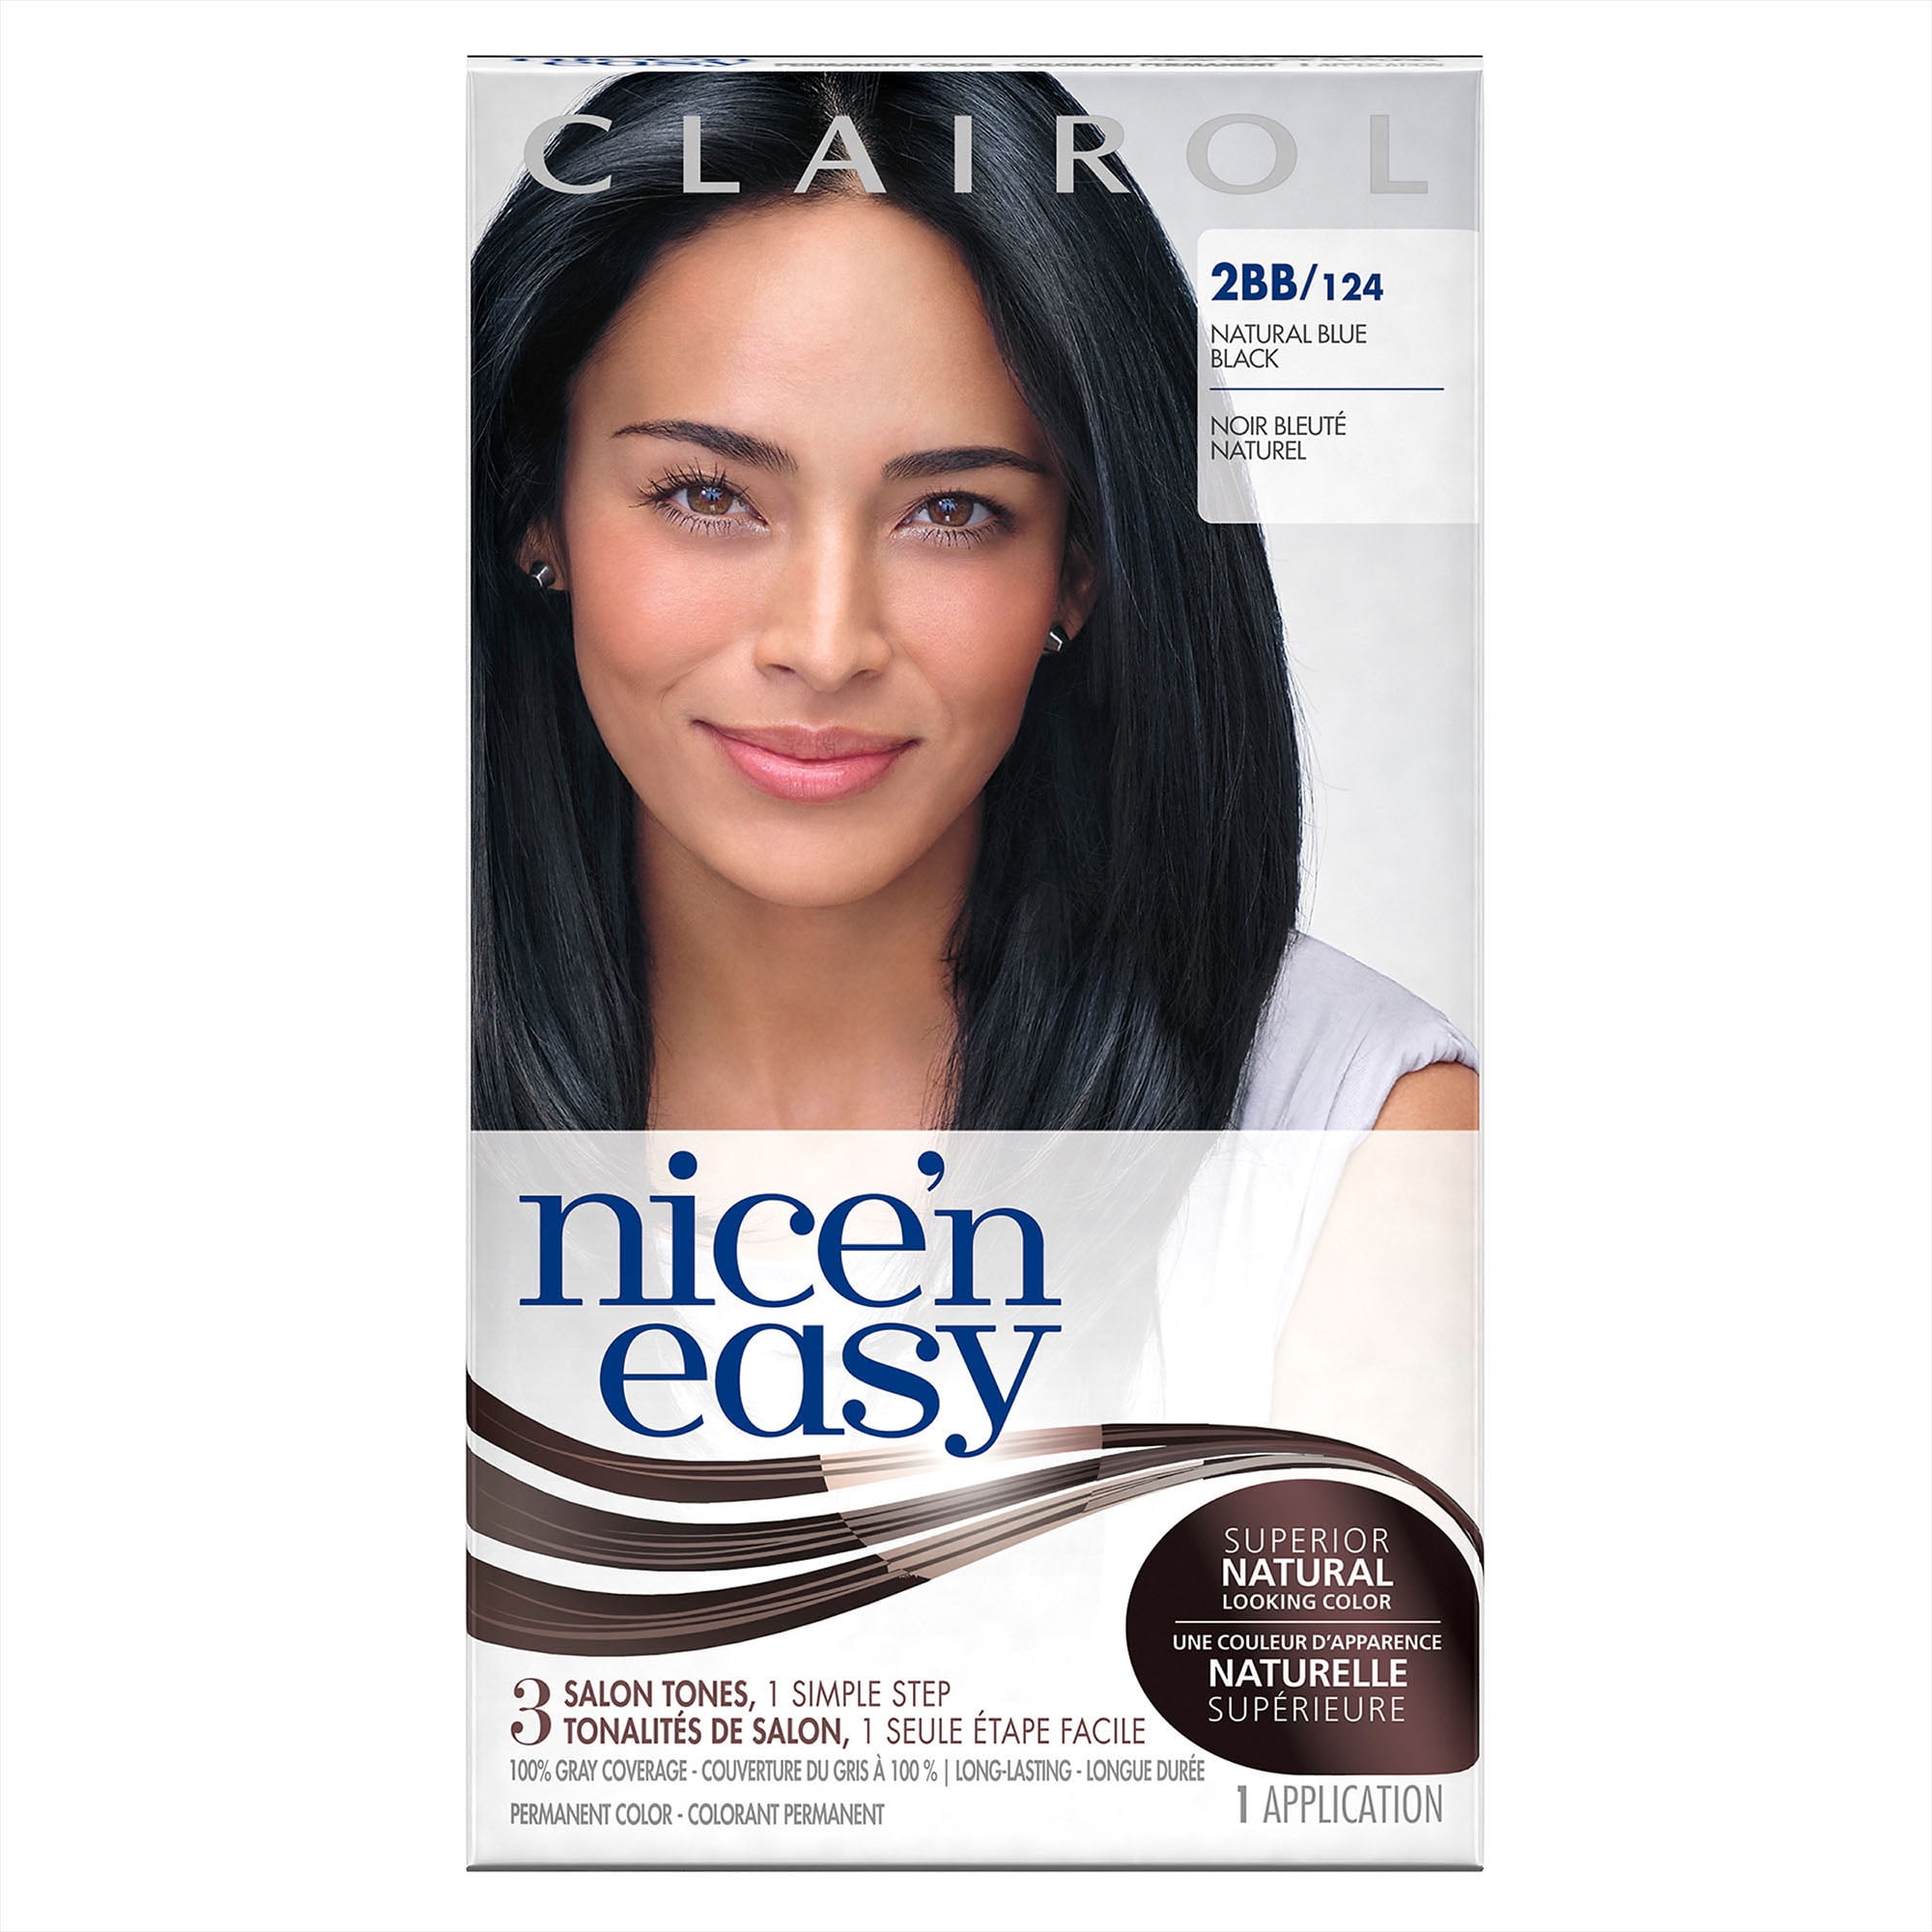 Clairol Nice 'n Easy Permanent Hair Color, 2BB/124 Natural Blue Black ... Natural Hair Color Dye